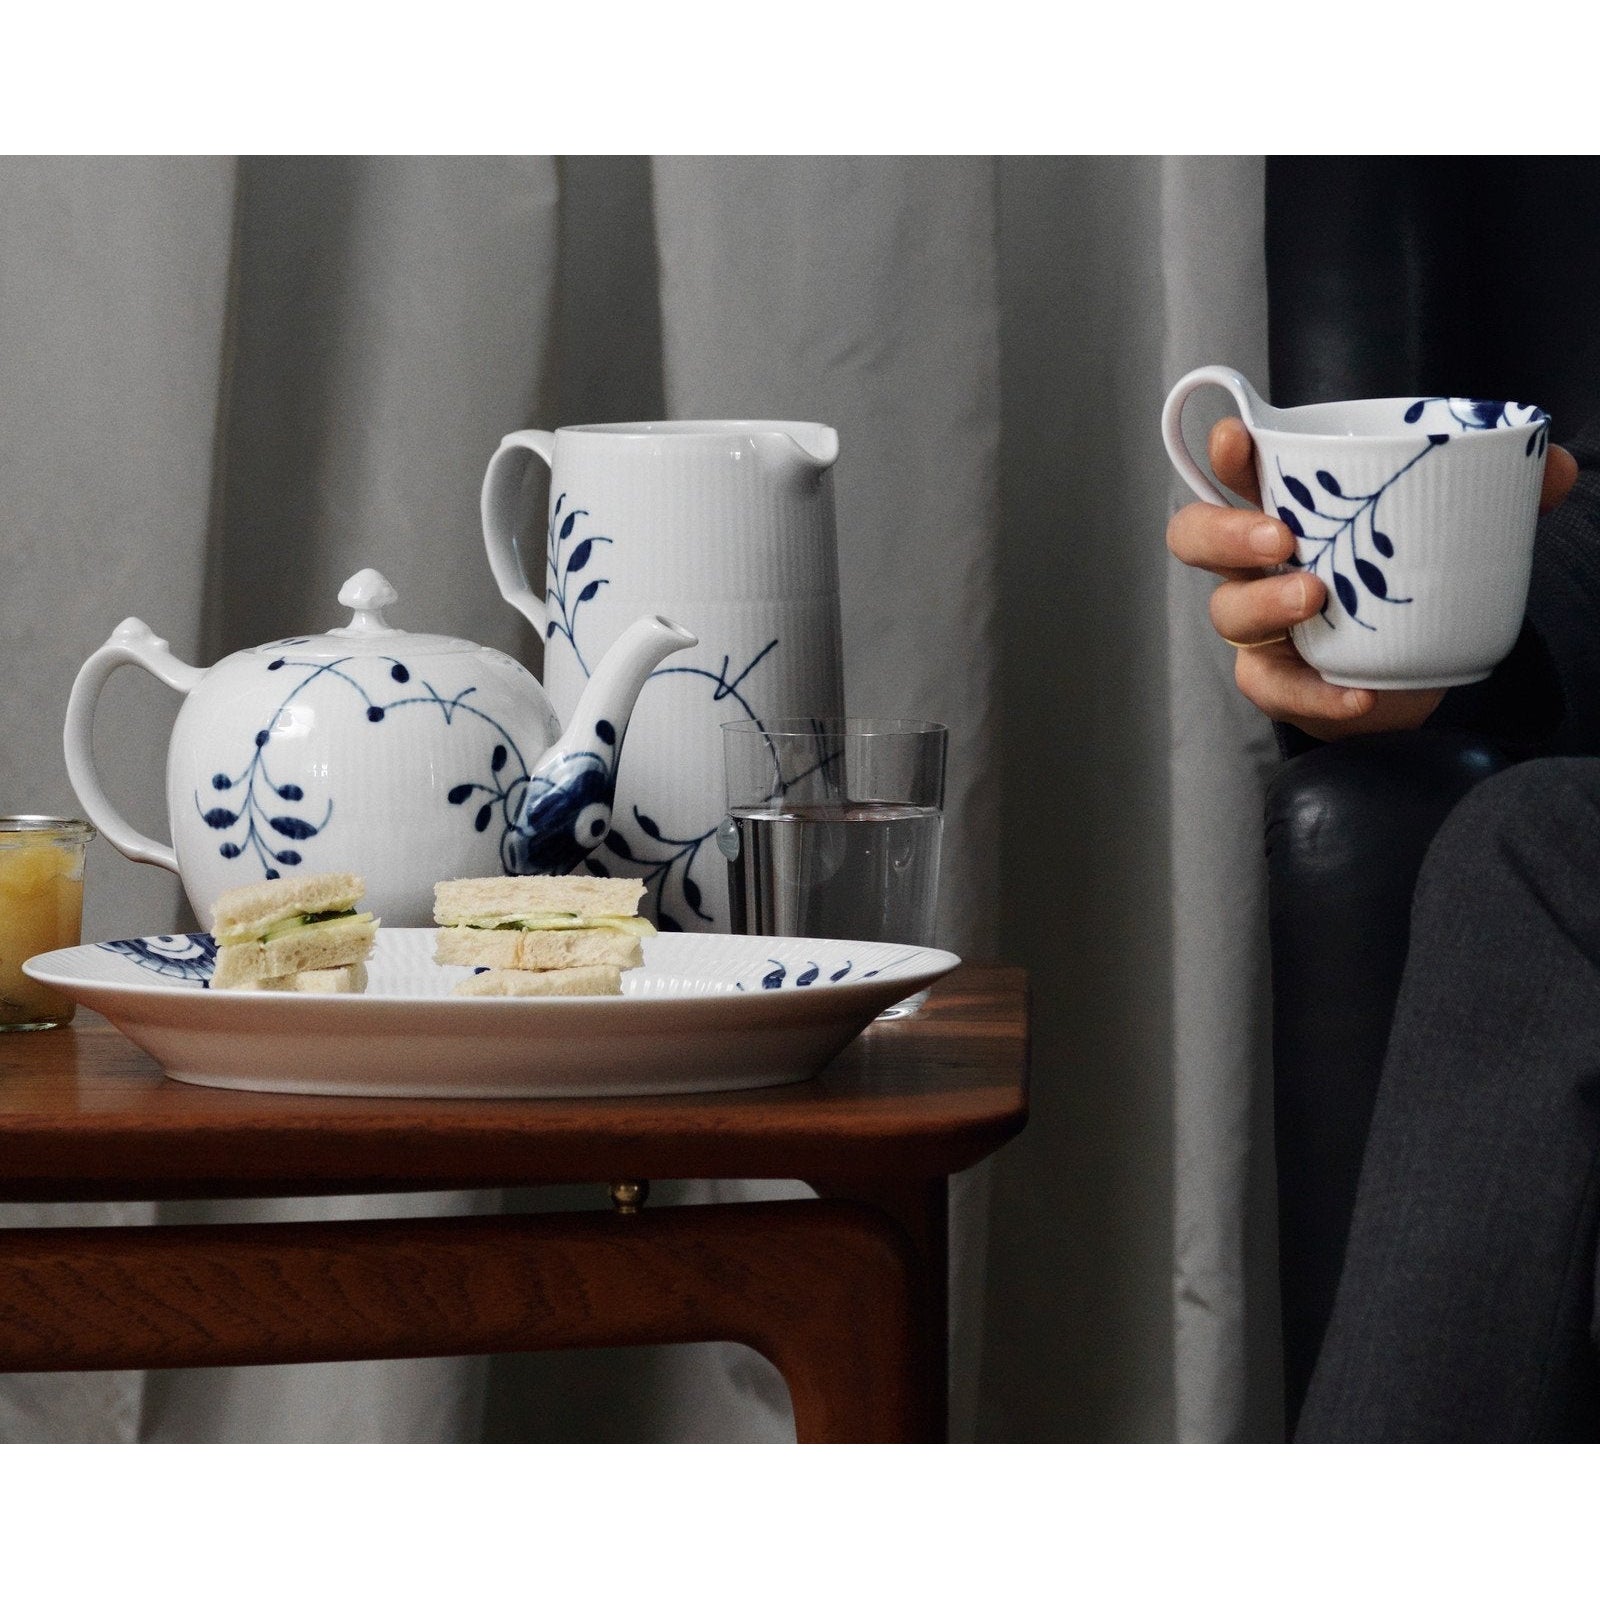 Royal Copenhagen Blue Abbated Mega Teapot, 100 CL